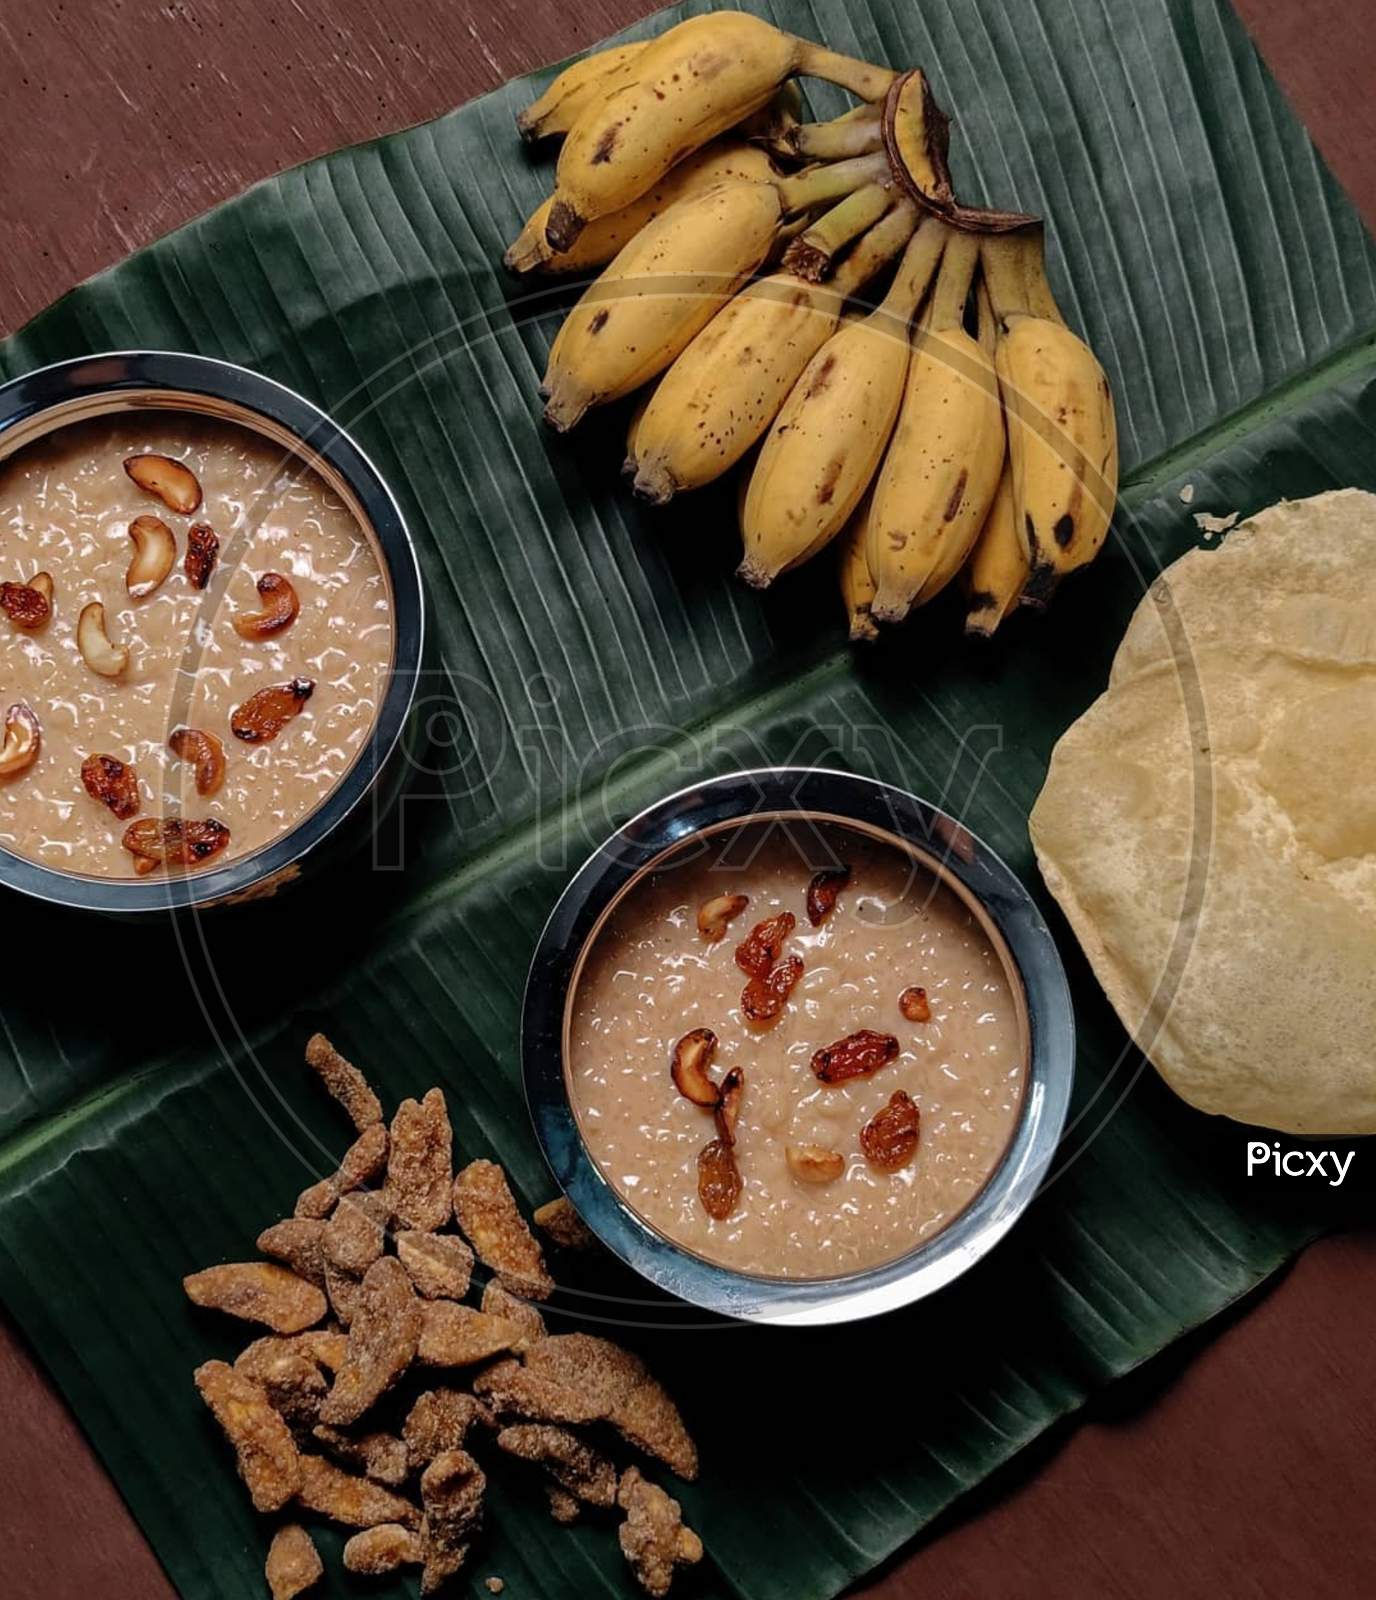 Traditional food items of kerala,india